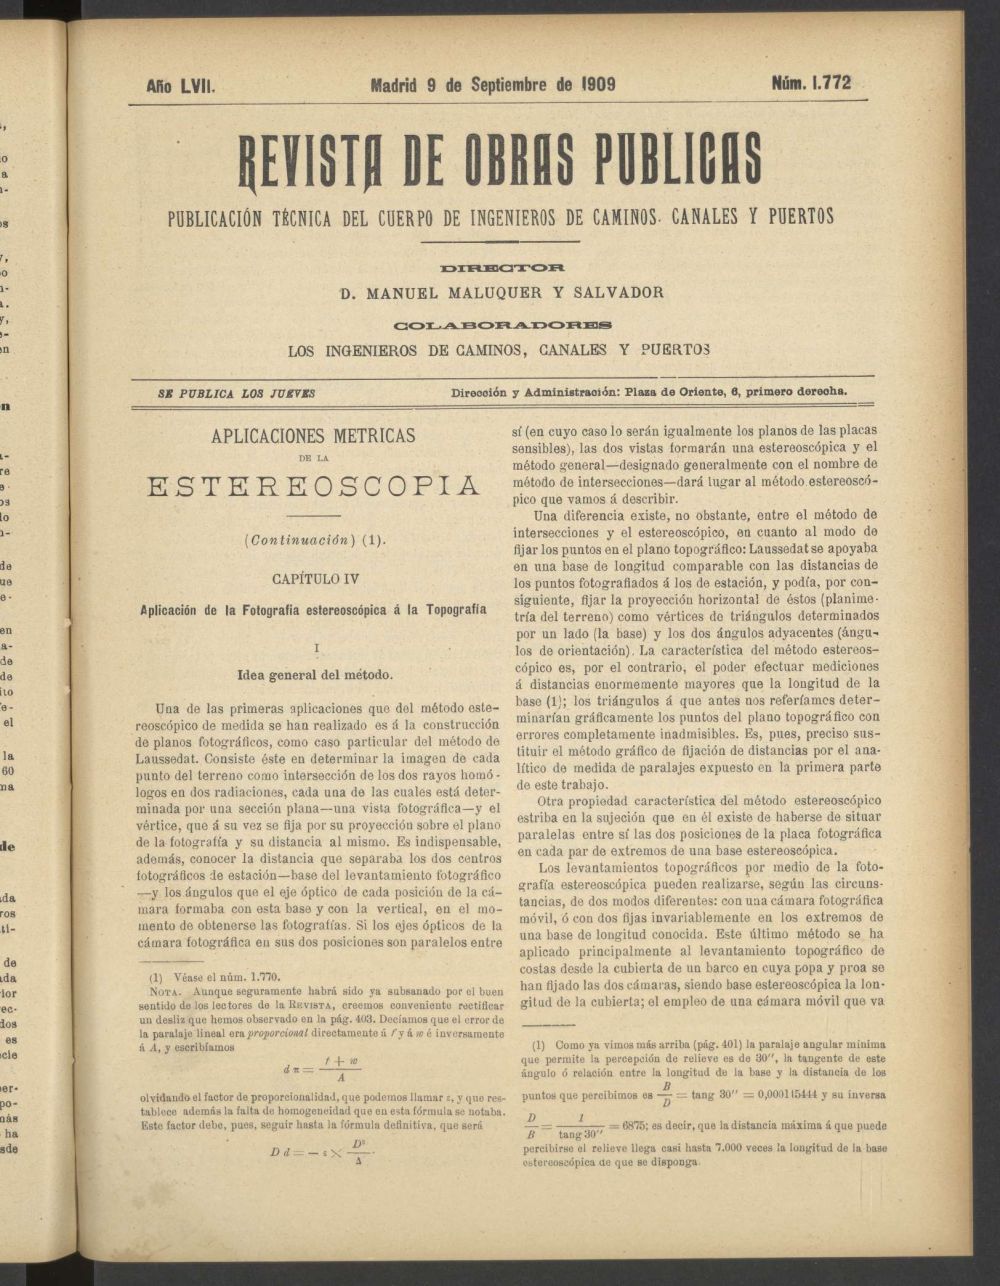 Revista de obras pblicas del 9 de septiembre de 1909